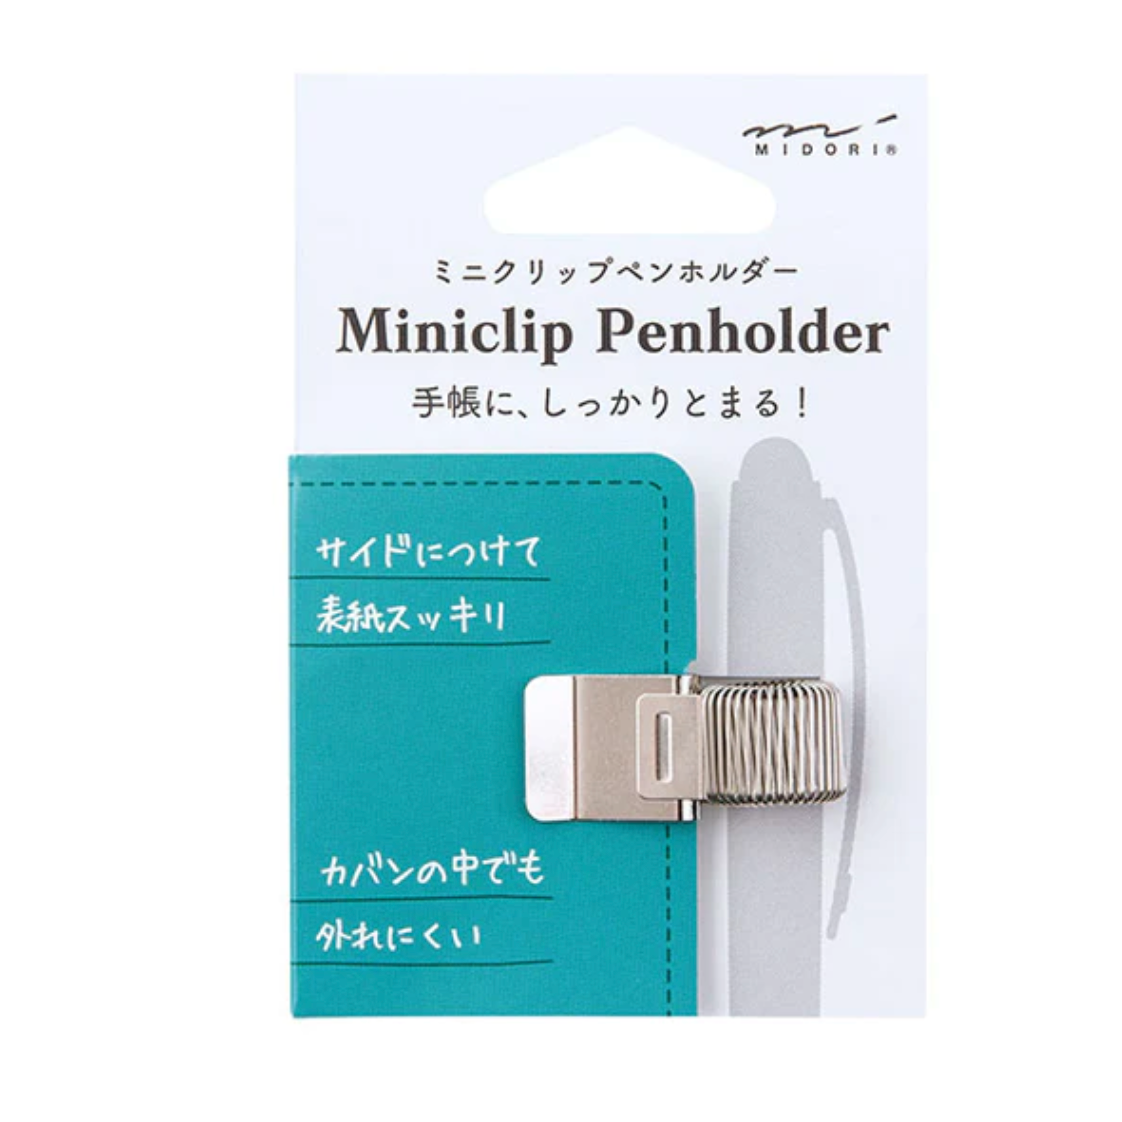 Miniclip Penholder Black